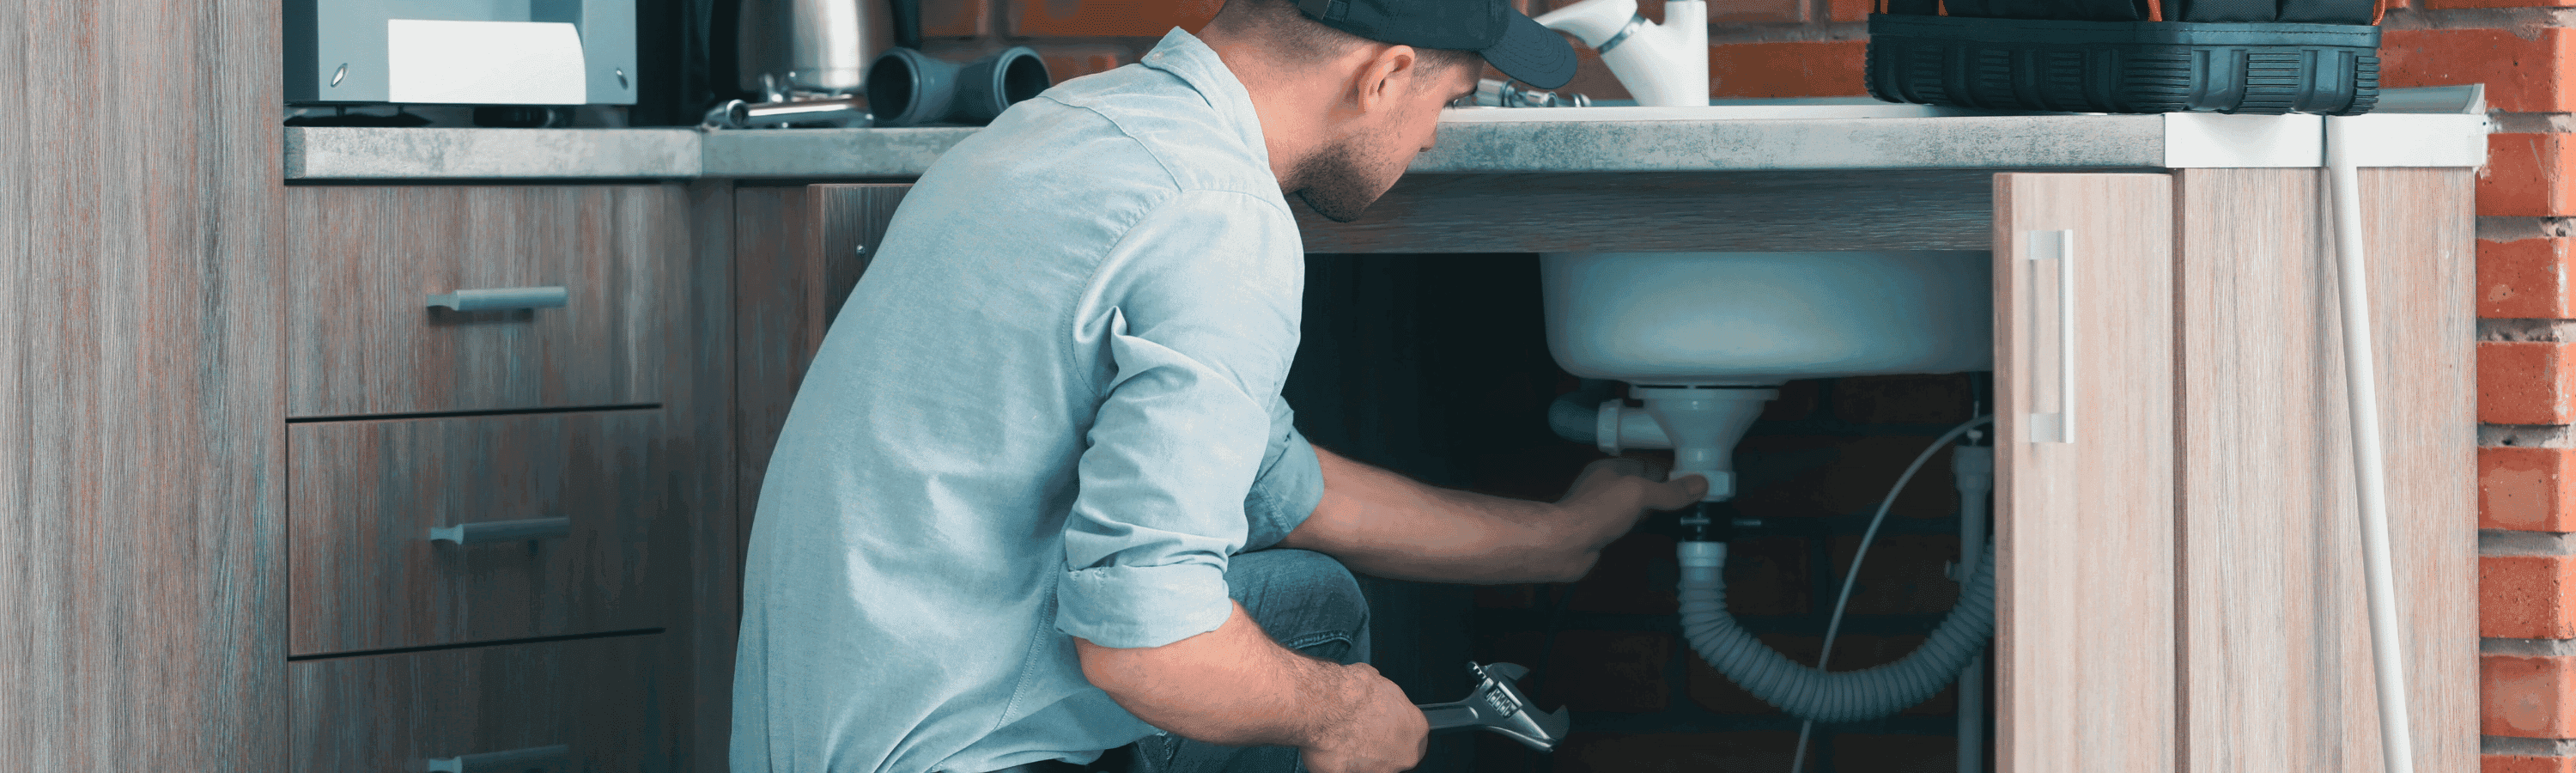 Professional Plumber Fixing Kitchen Sink